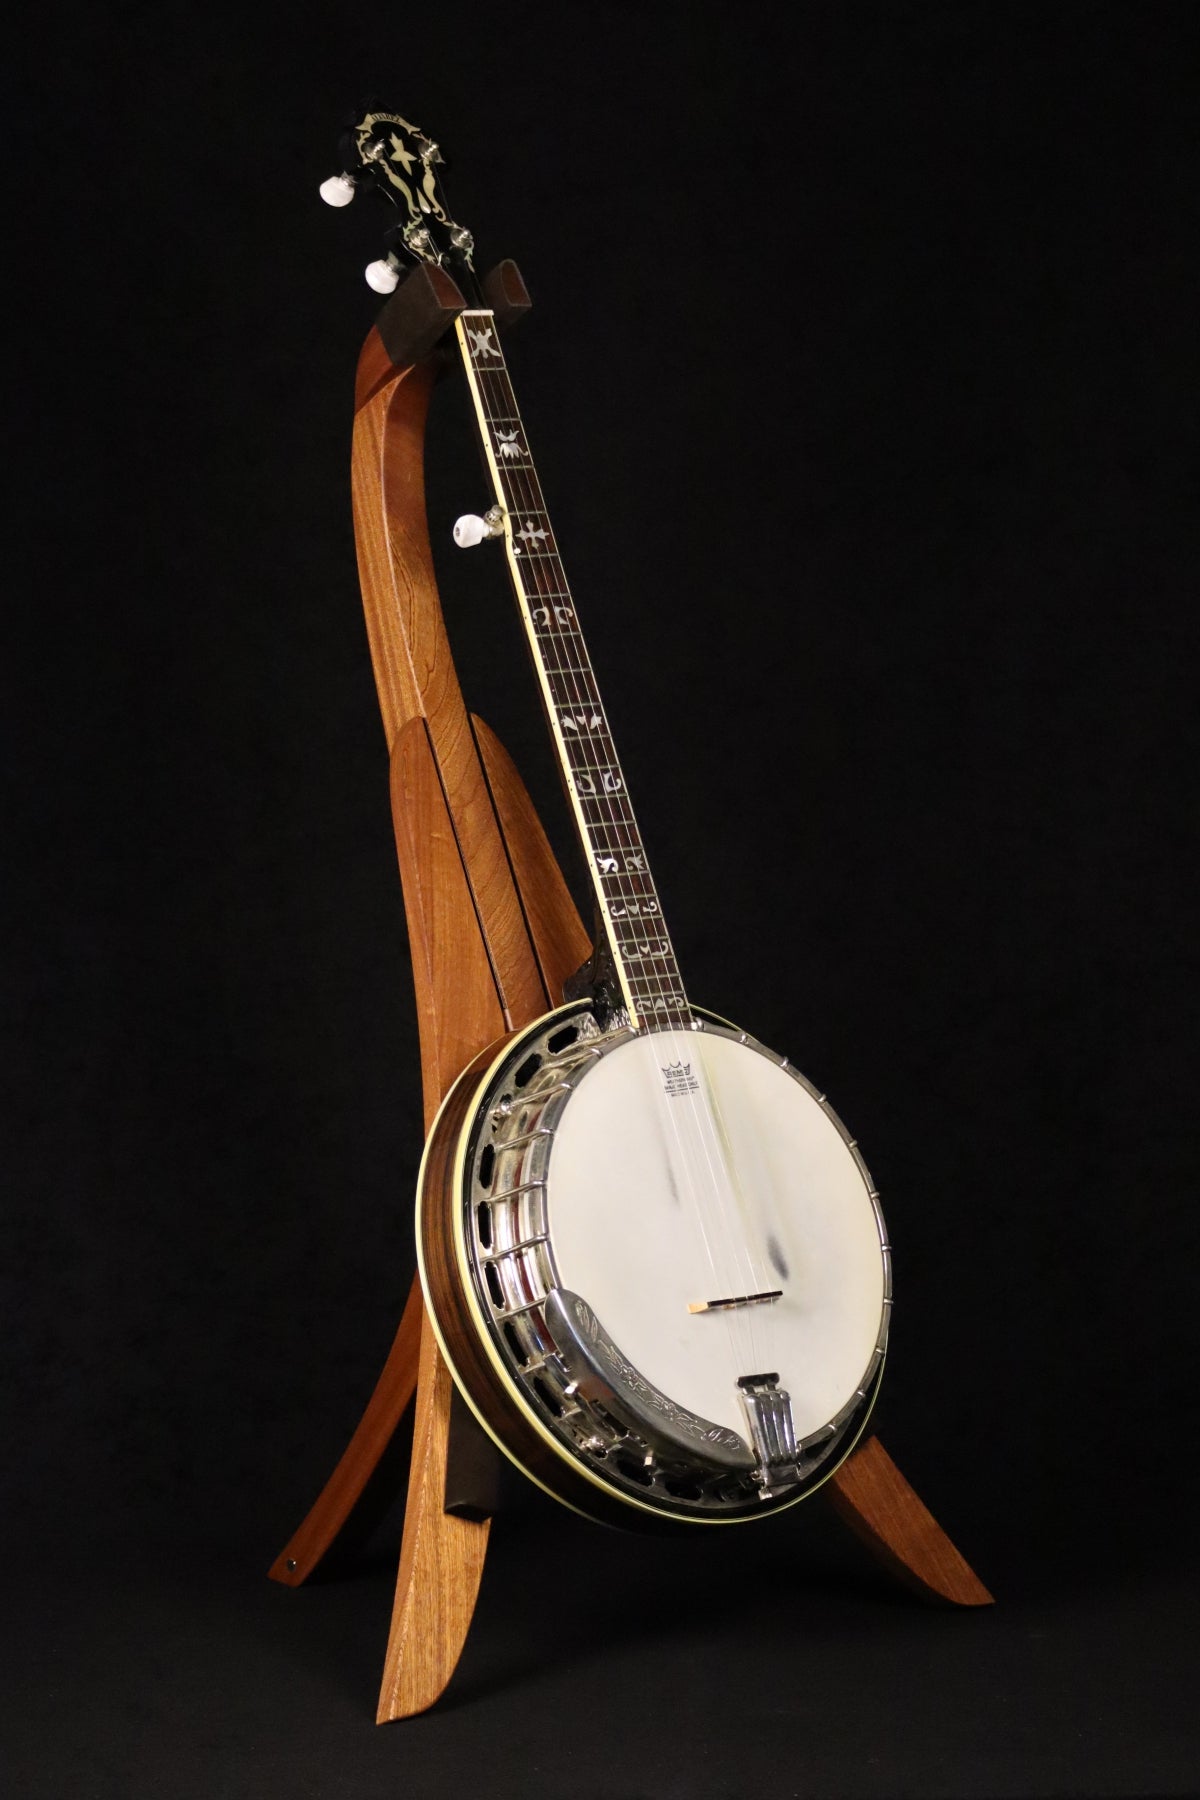 Folding sapele mahogany wood banjo floor stand full front image with Alvarez banjo